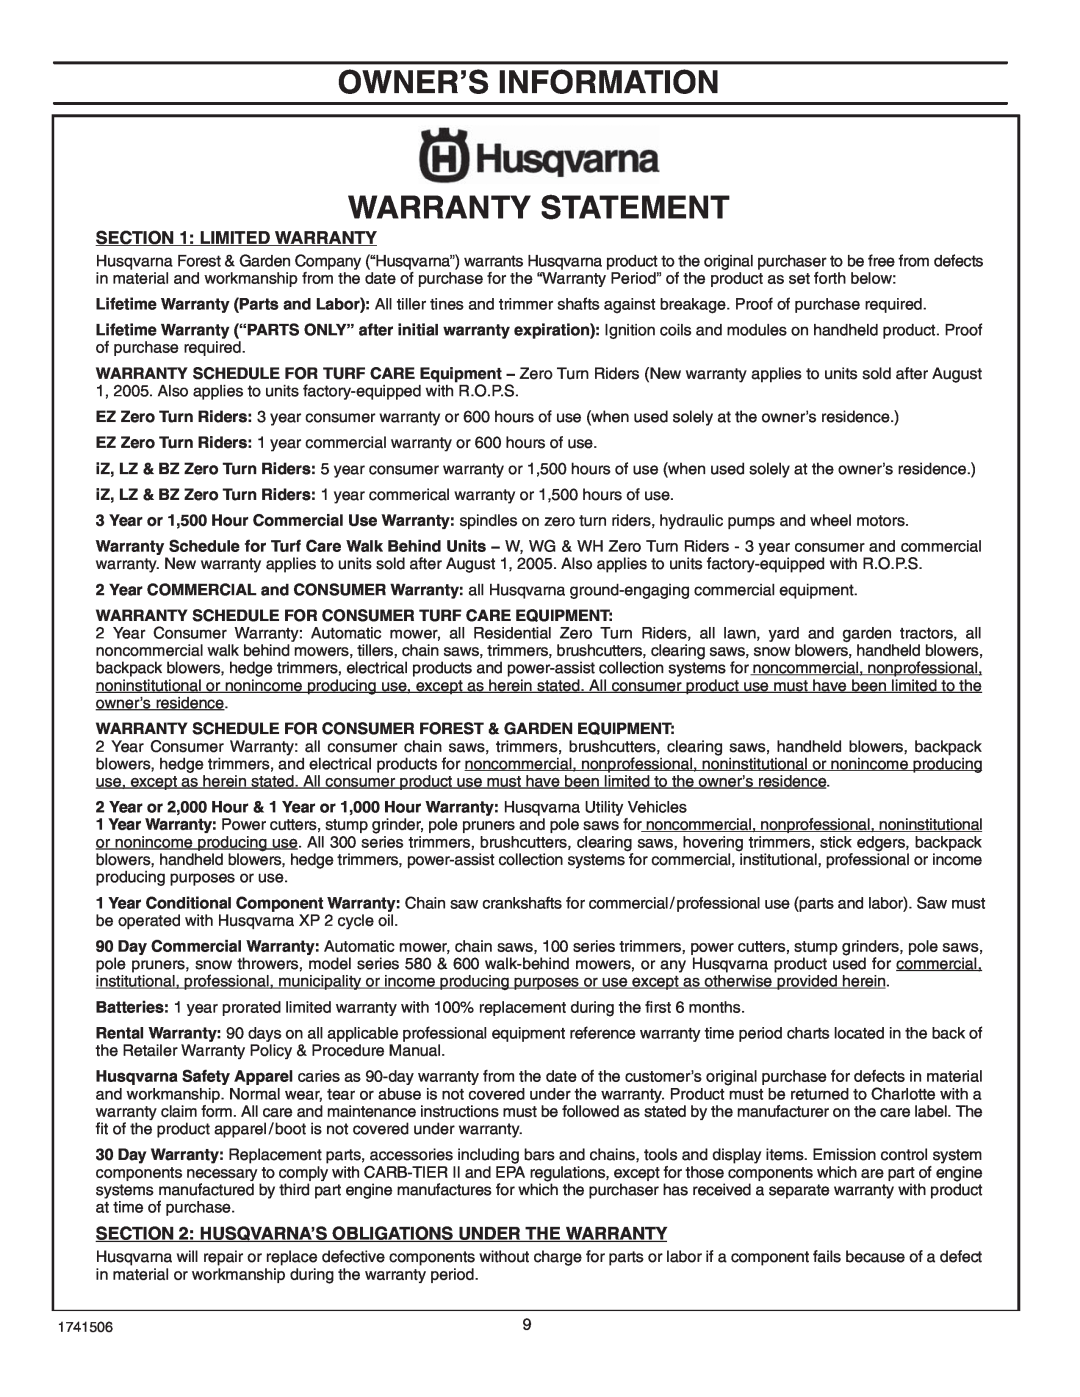 Husqvarna 5021 E Owner’S Information, Warranty Statement, Limited Warranty, Husqvarna’S Obligations Under The Warranty 